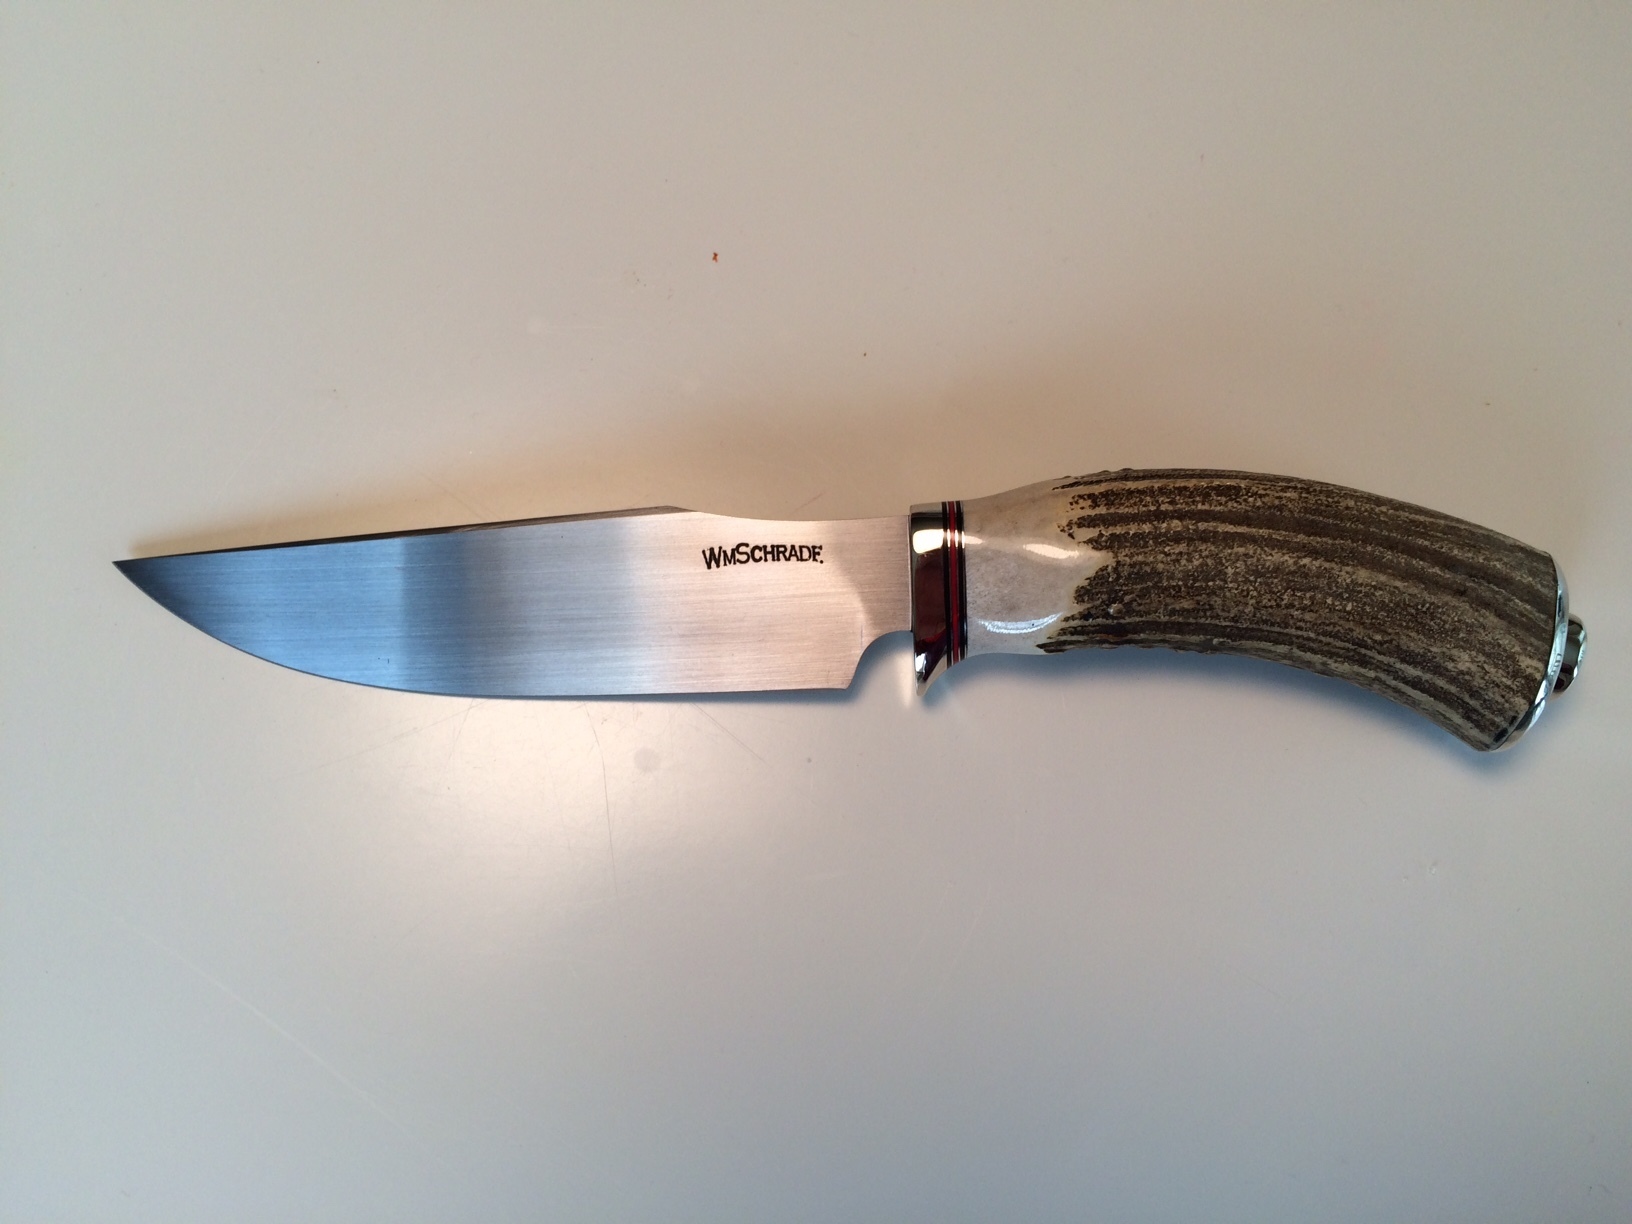 Stag Handle Hunting Knife handmade by Bill Schrade custom cutler